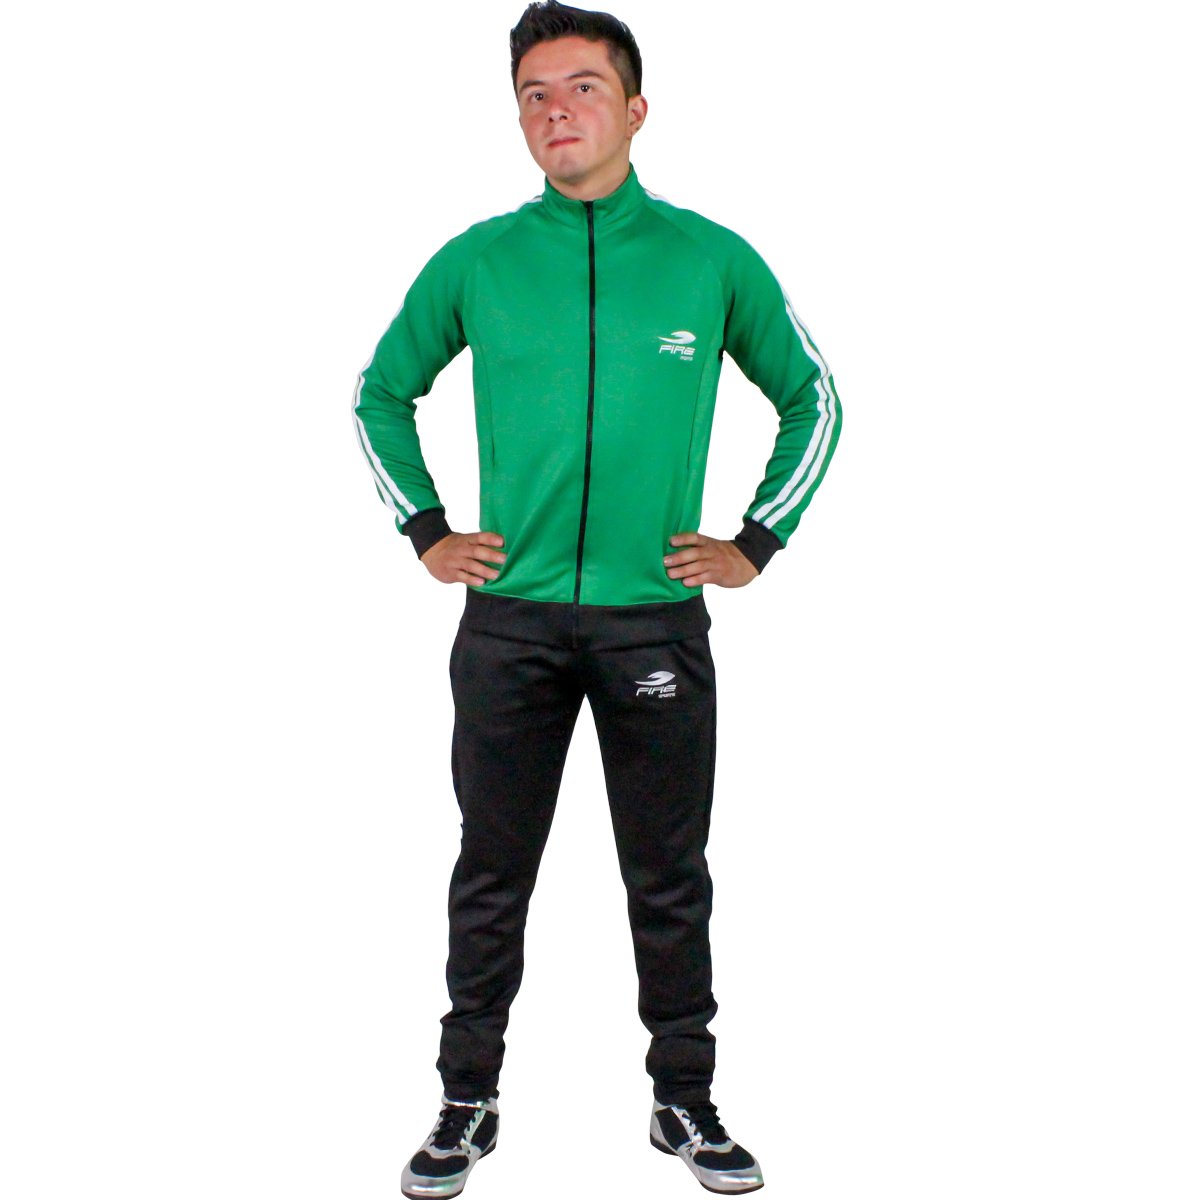 Pants deportivo Fire Sports Varonil M3 2 franjas Color Verde-Negro